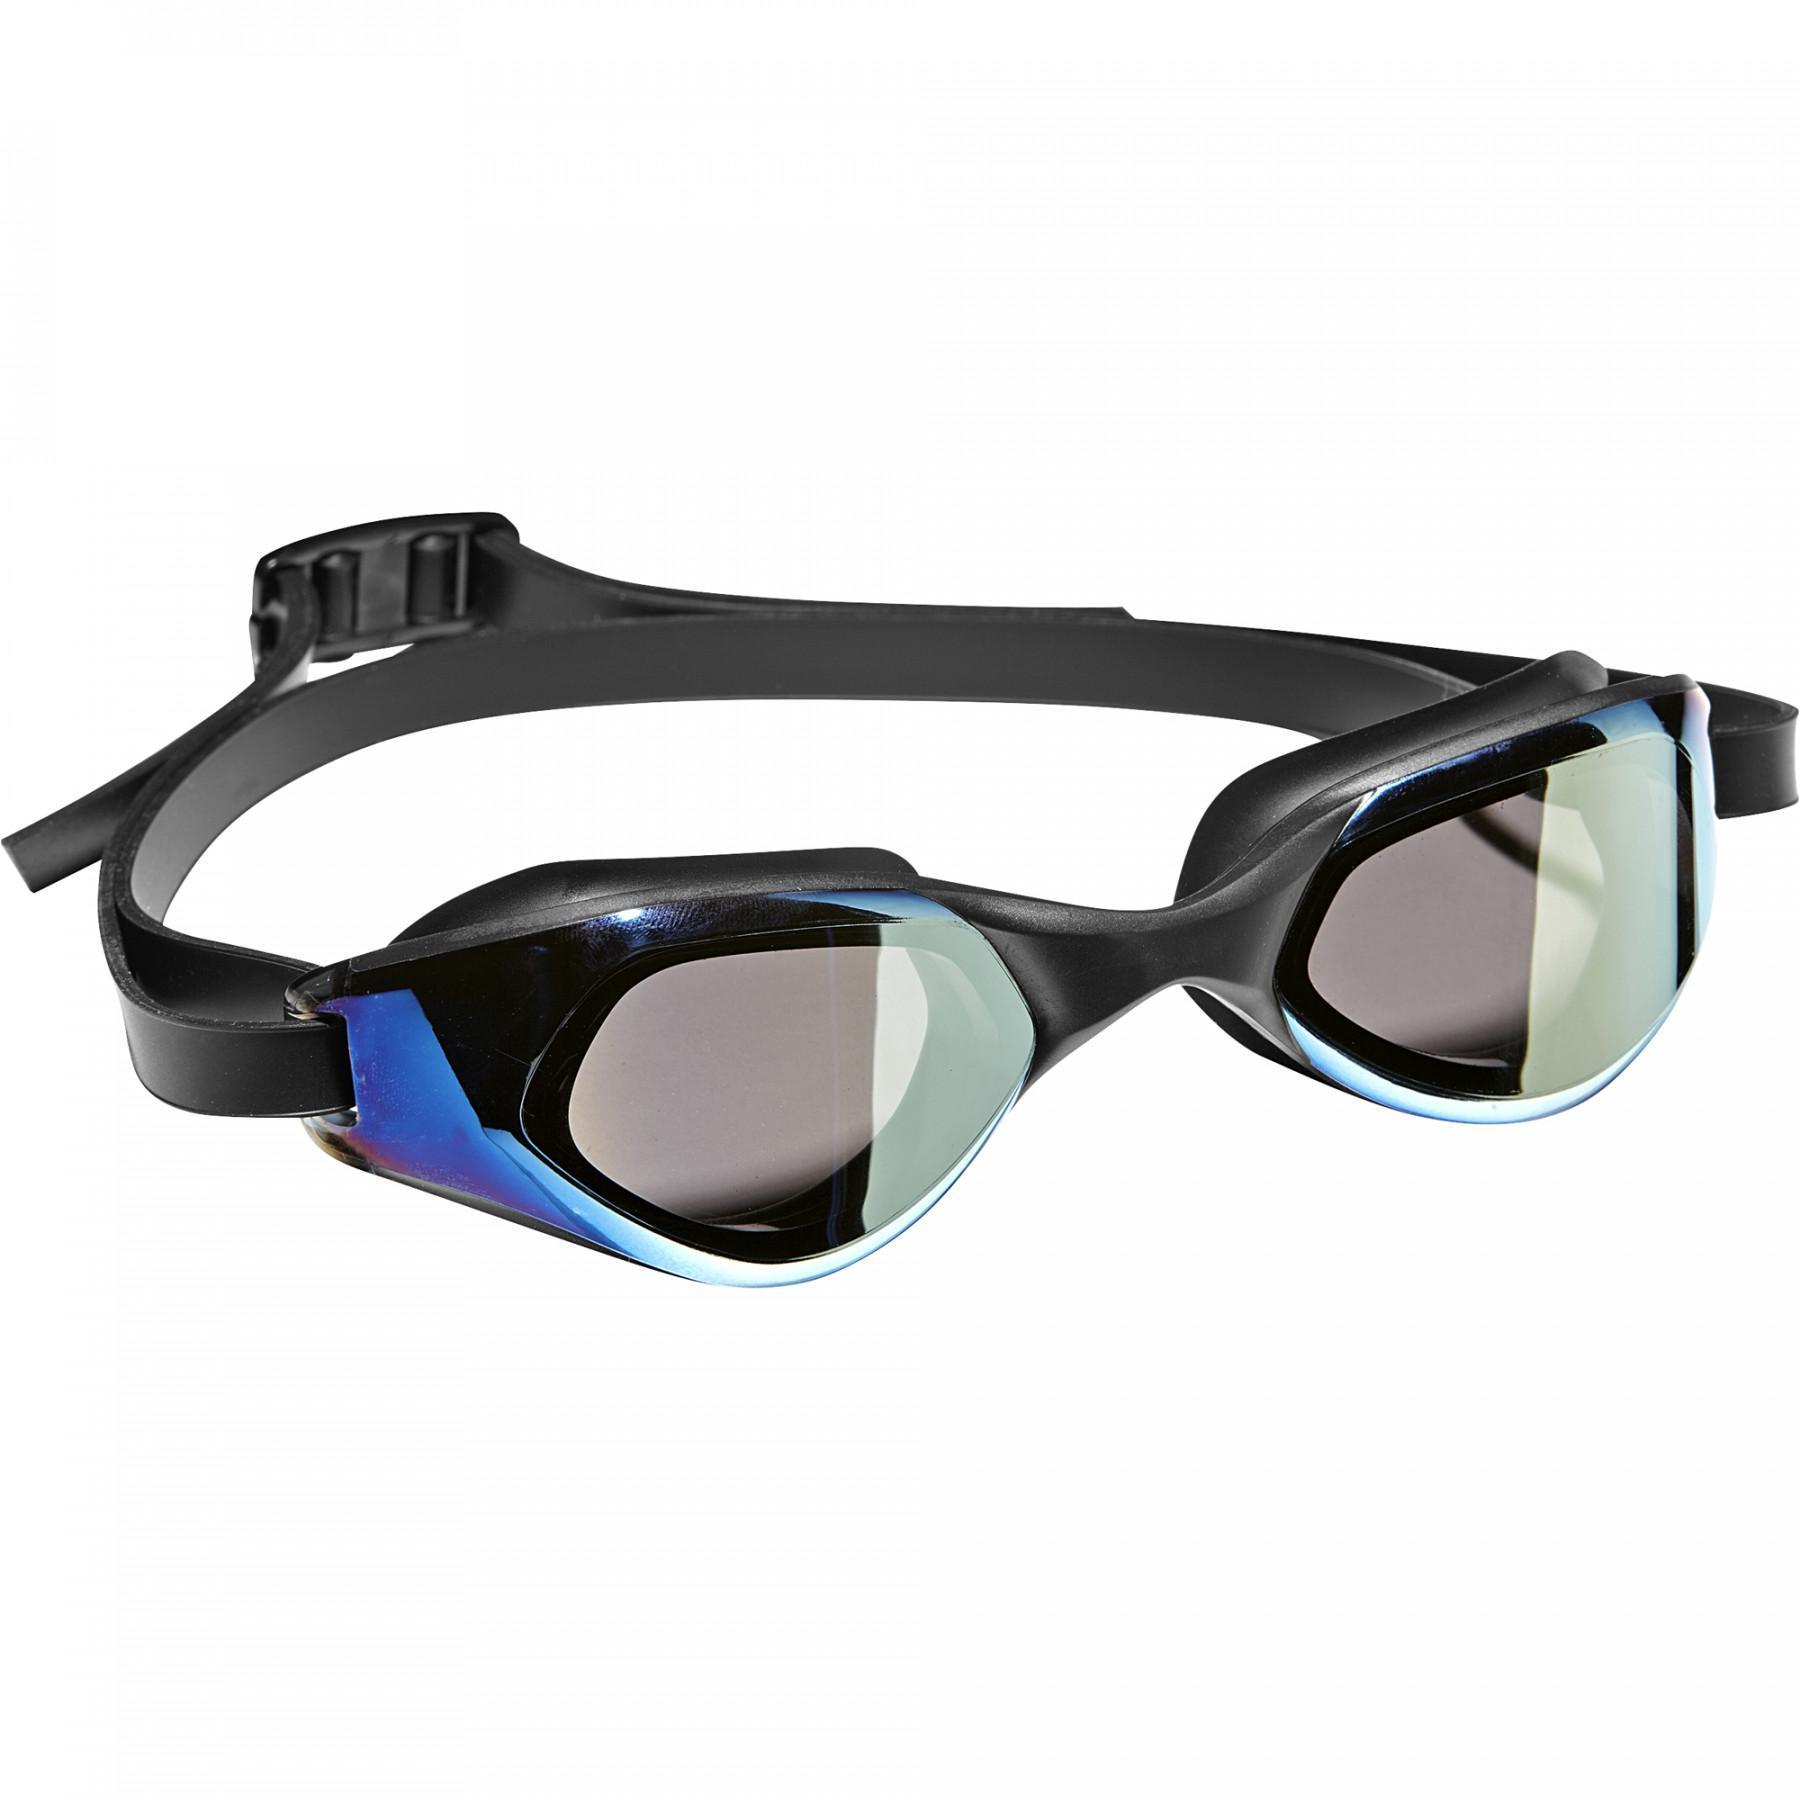 Swimming goggles adidas Persistar Comfort Mirrored